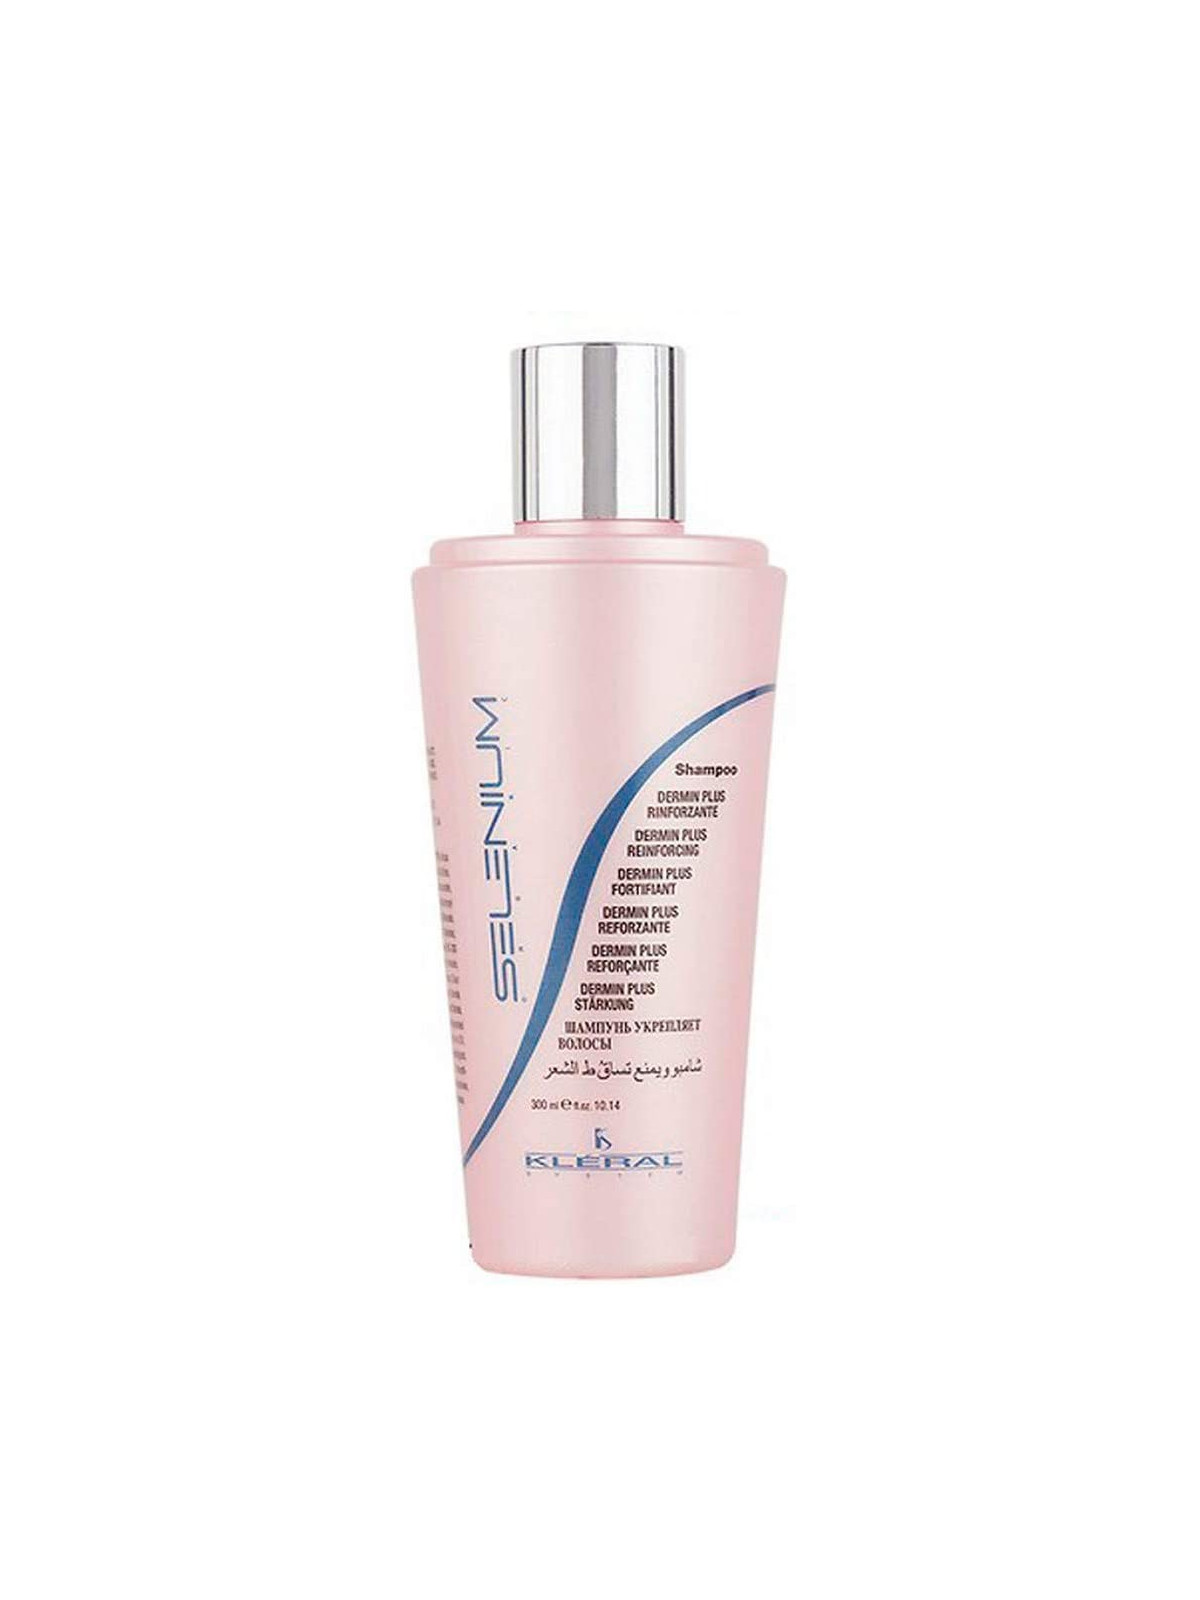 Kléral Selenium Shampoo dermin plus rinforzante 300 ml 5,50 € -30%